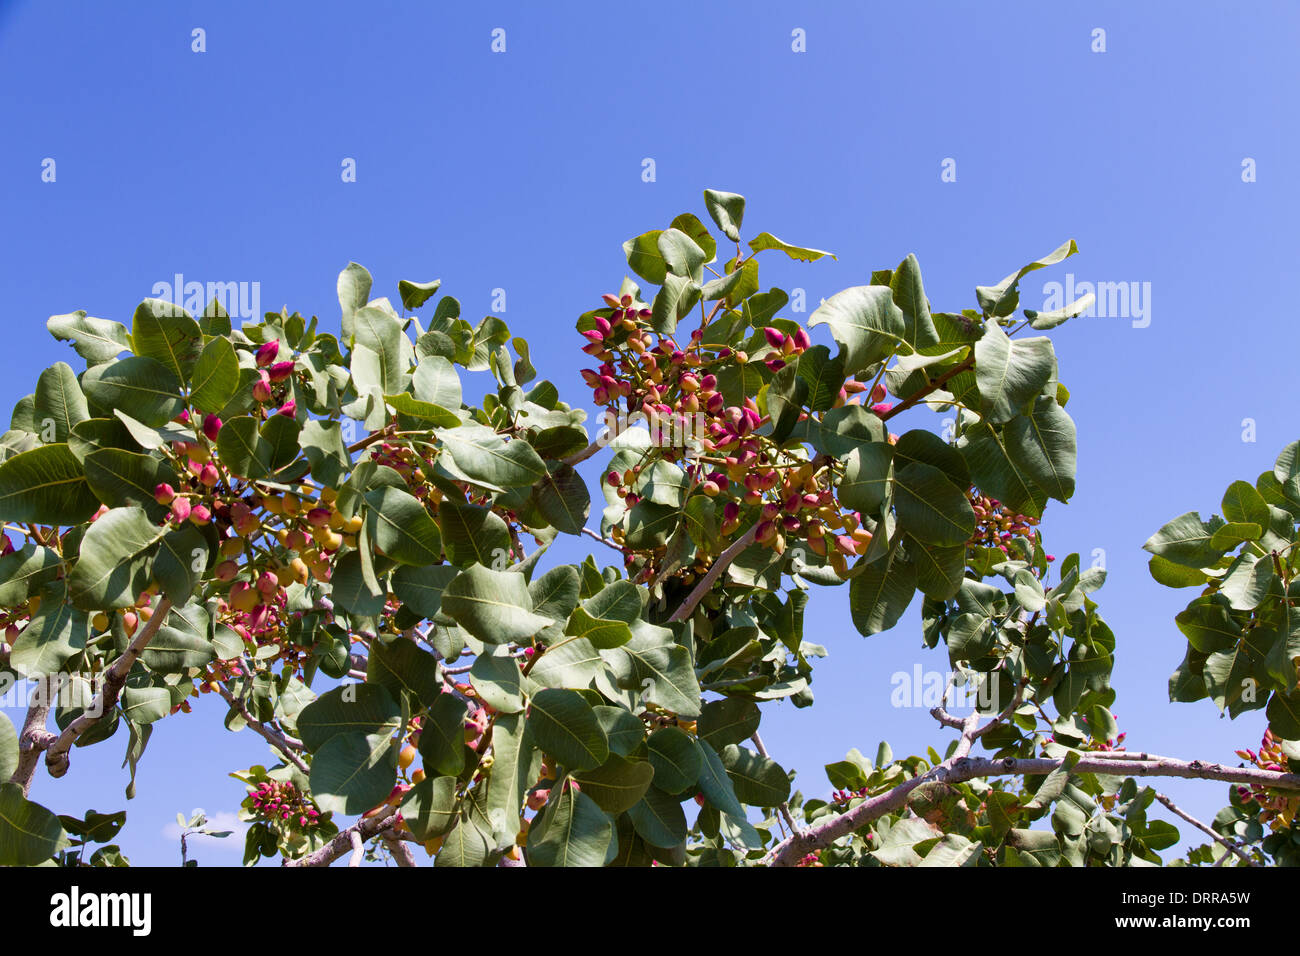 Die Welt-berühmten Aegina Insel Pistazie Bäume Stockfoto